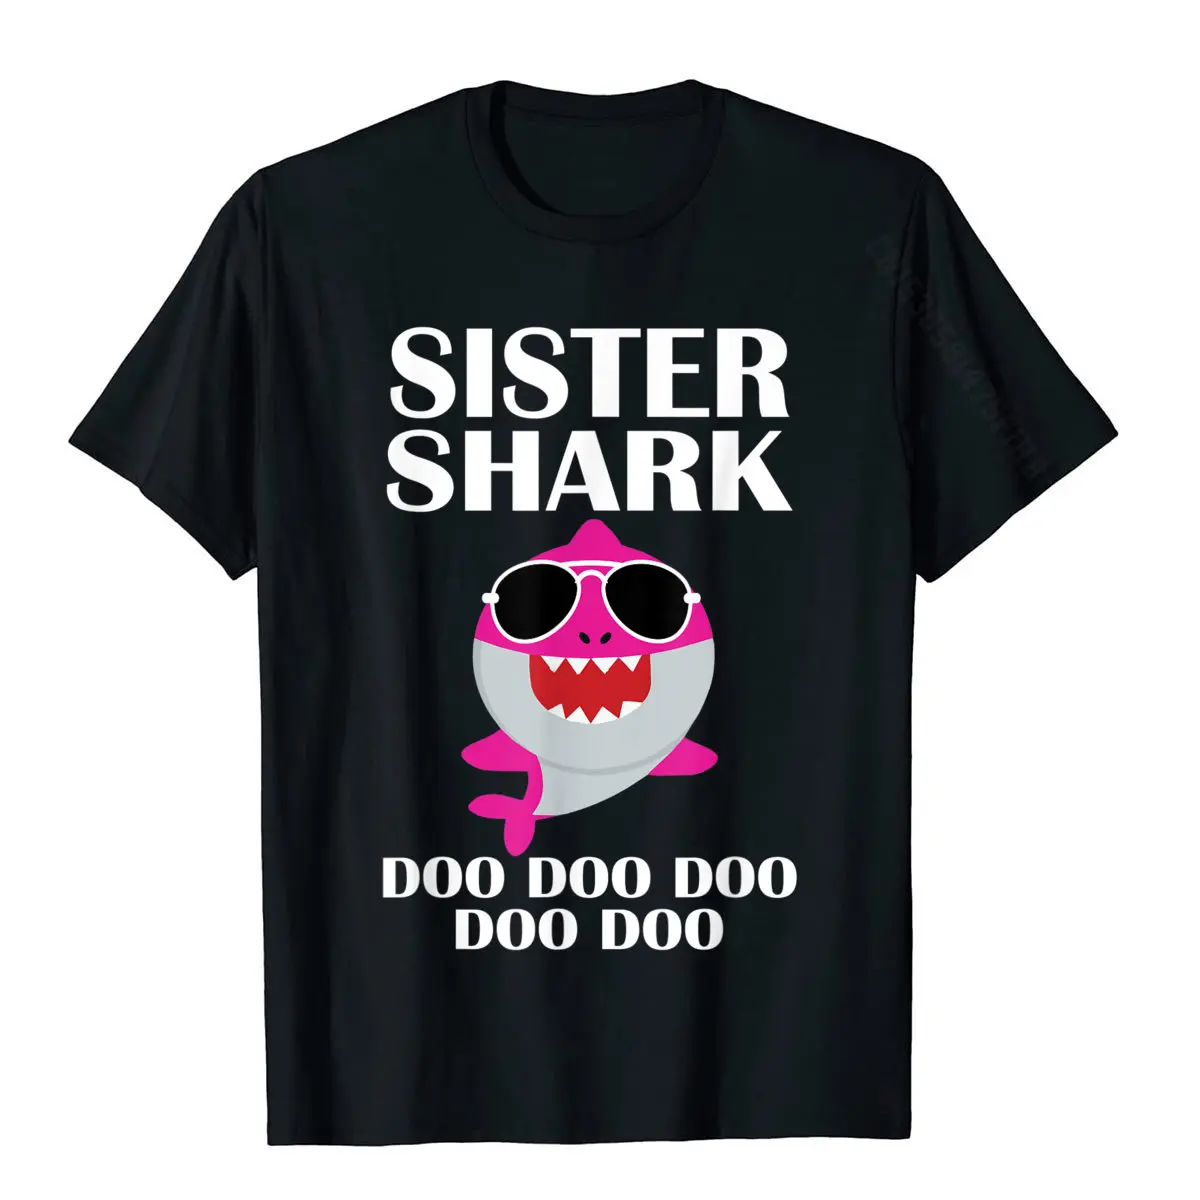 Sister Shark Shirt Doo Doo Doo Funny Sister Christmas Gift T-Shirt Plain Man Tops Shirts Personalized Tshirts Cotton Cosie